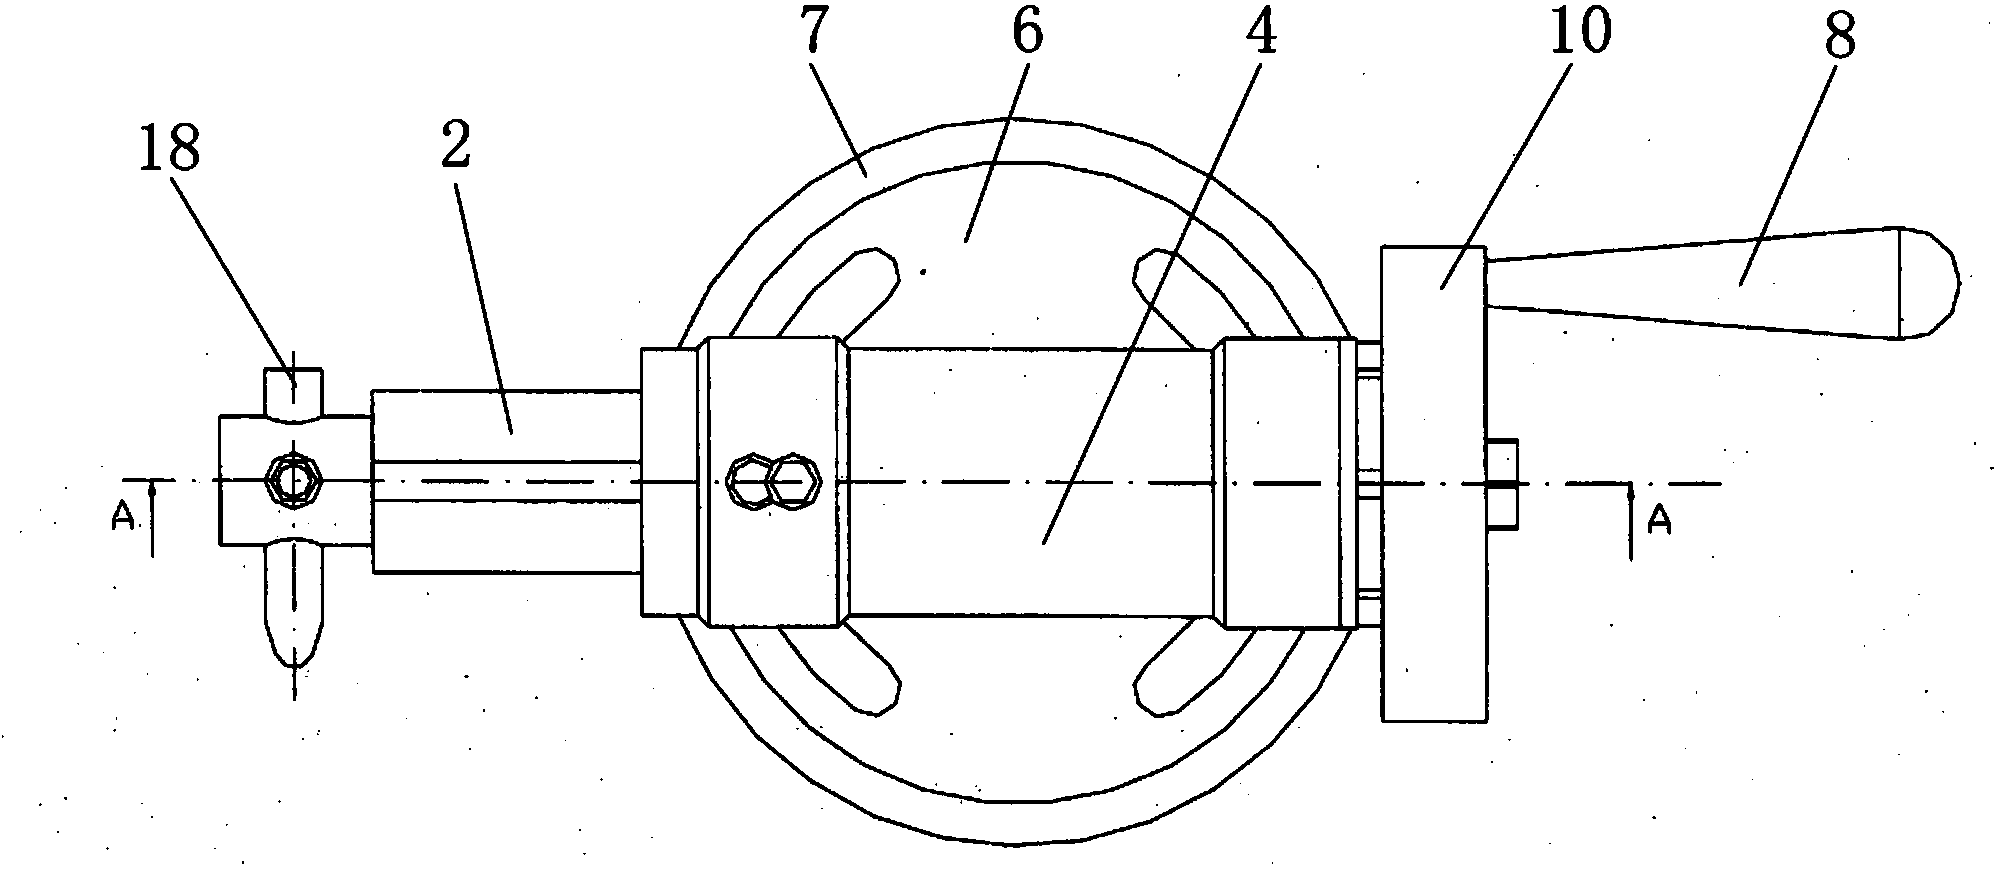 Grinding wheel angle correcting device for cylindrical grinding machine and grinding wheel angle correcting method